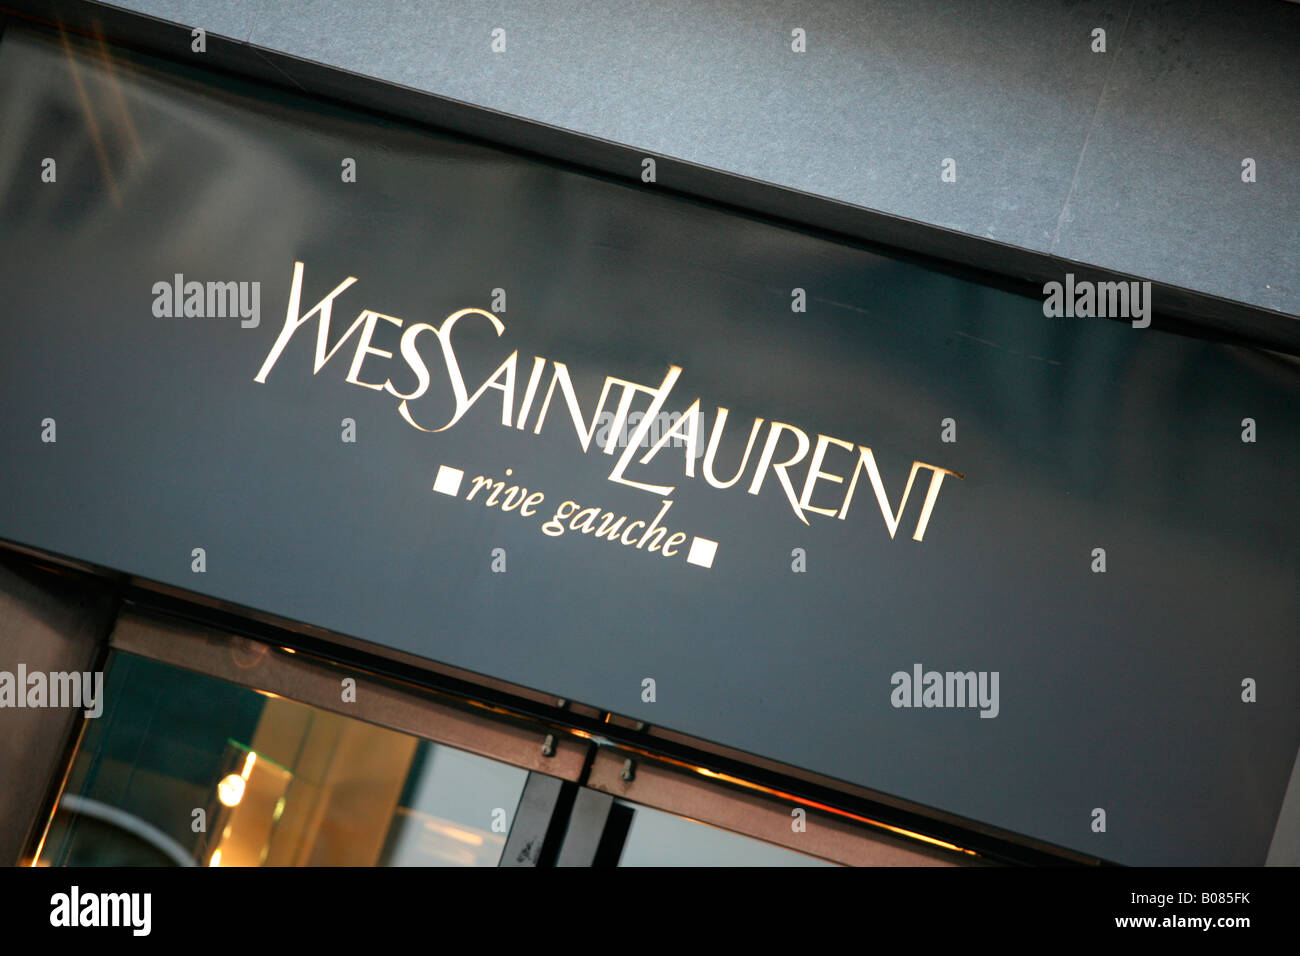 Yves Saint Laurent store, London Stock Photo: 17390343 - Alamy